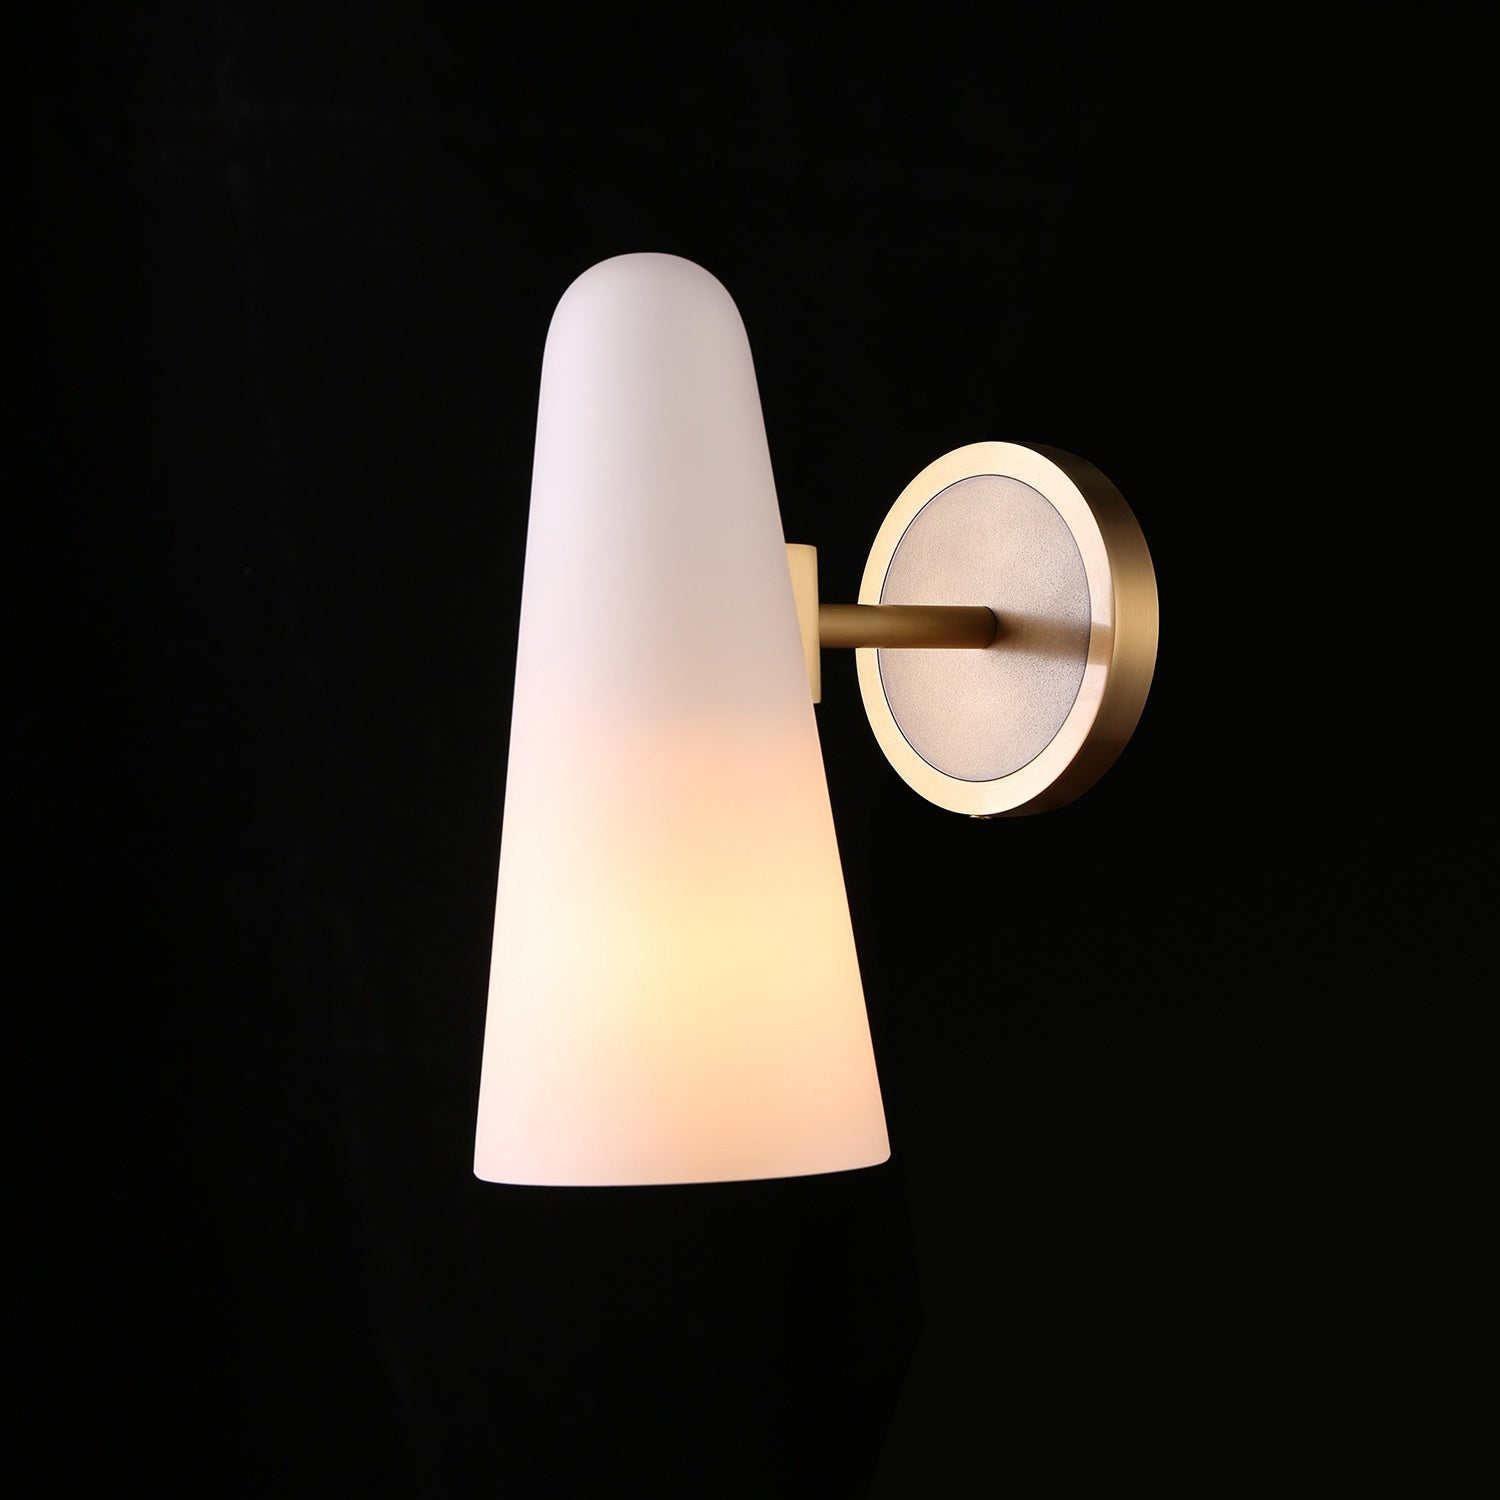 Loudspeaker Shape Sconce Light, Brass Porcelain Wall lights, Bedroom Wall Sconces - Wing Lightings